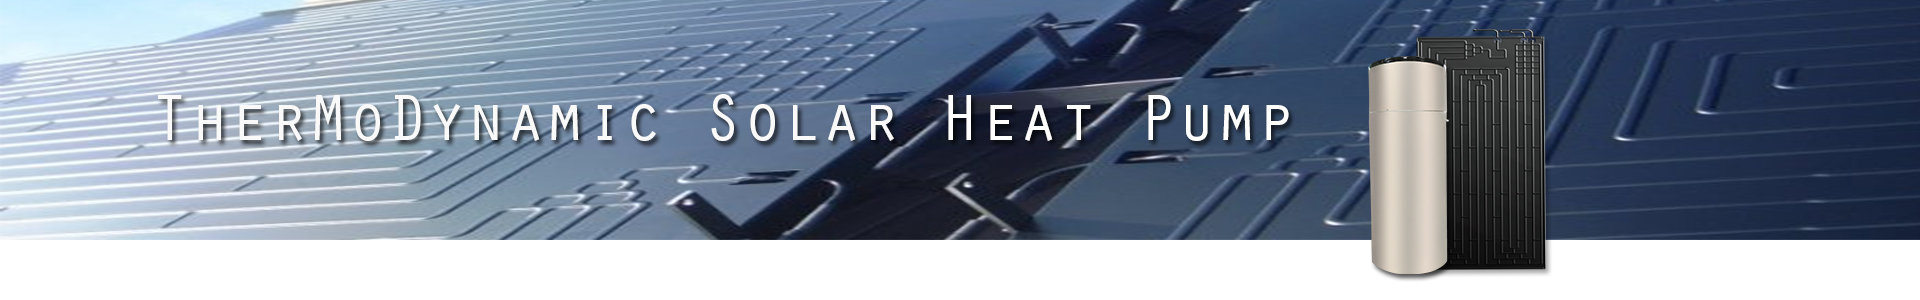 Thermodynamic Solar Hot Water Heat Pump